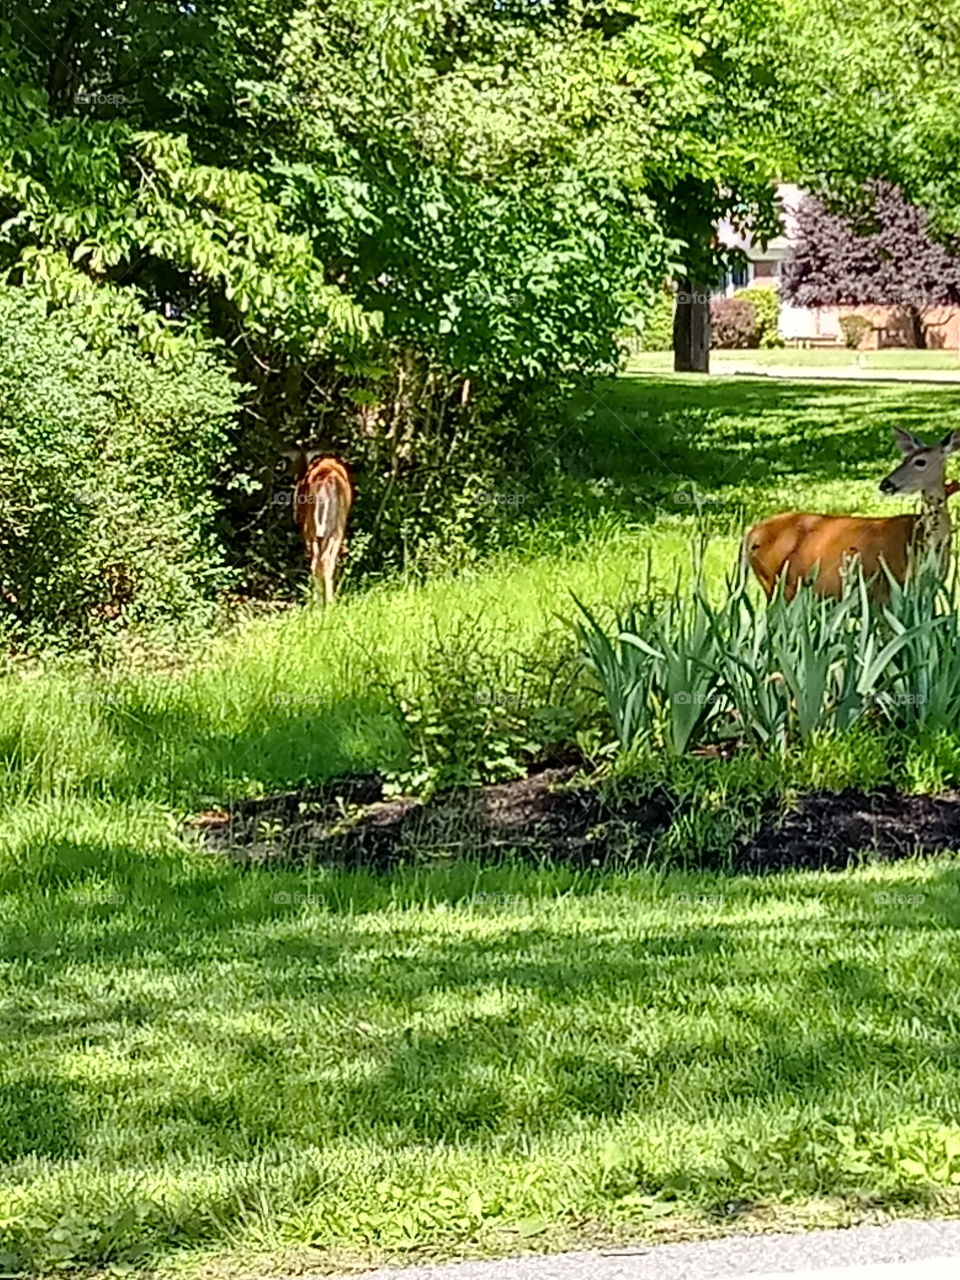 Deer in Parma Ohio